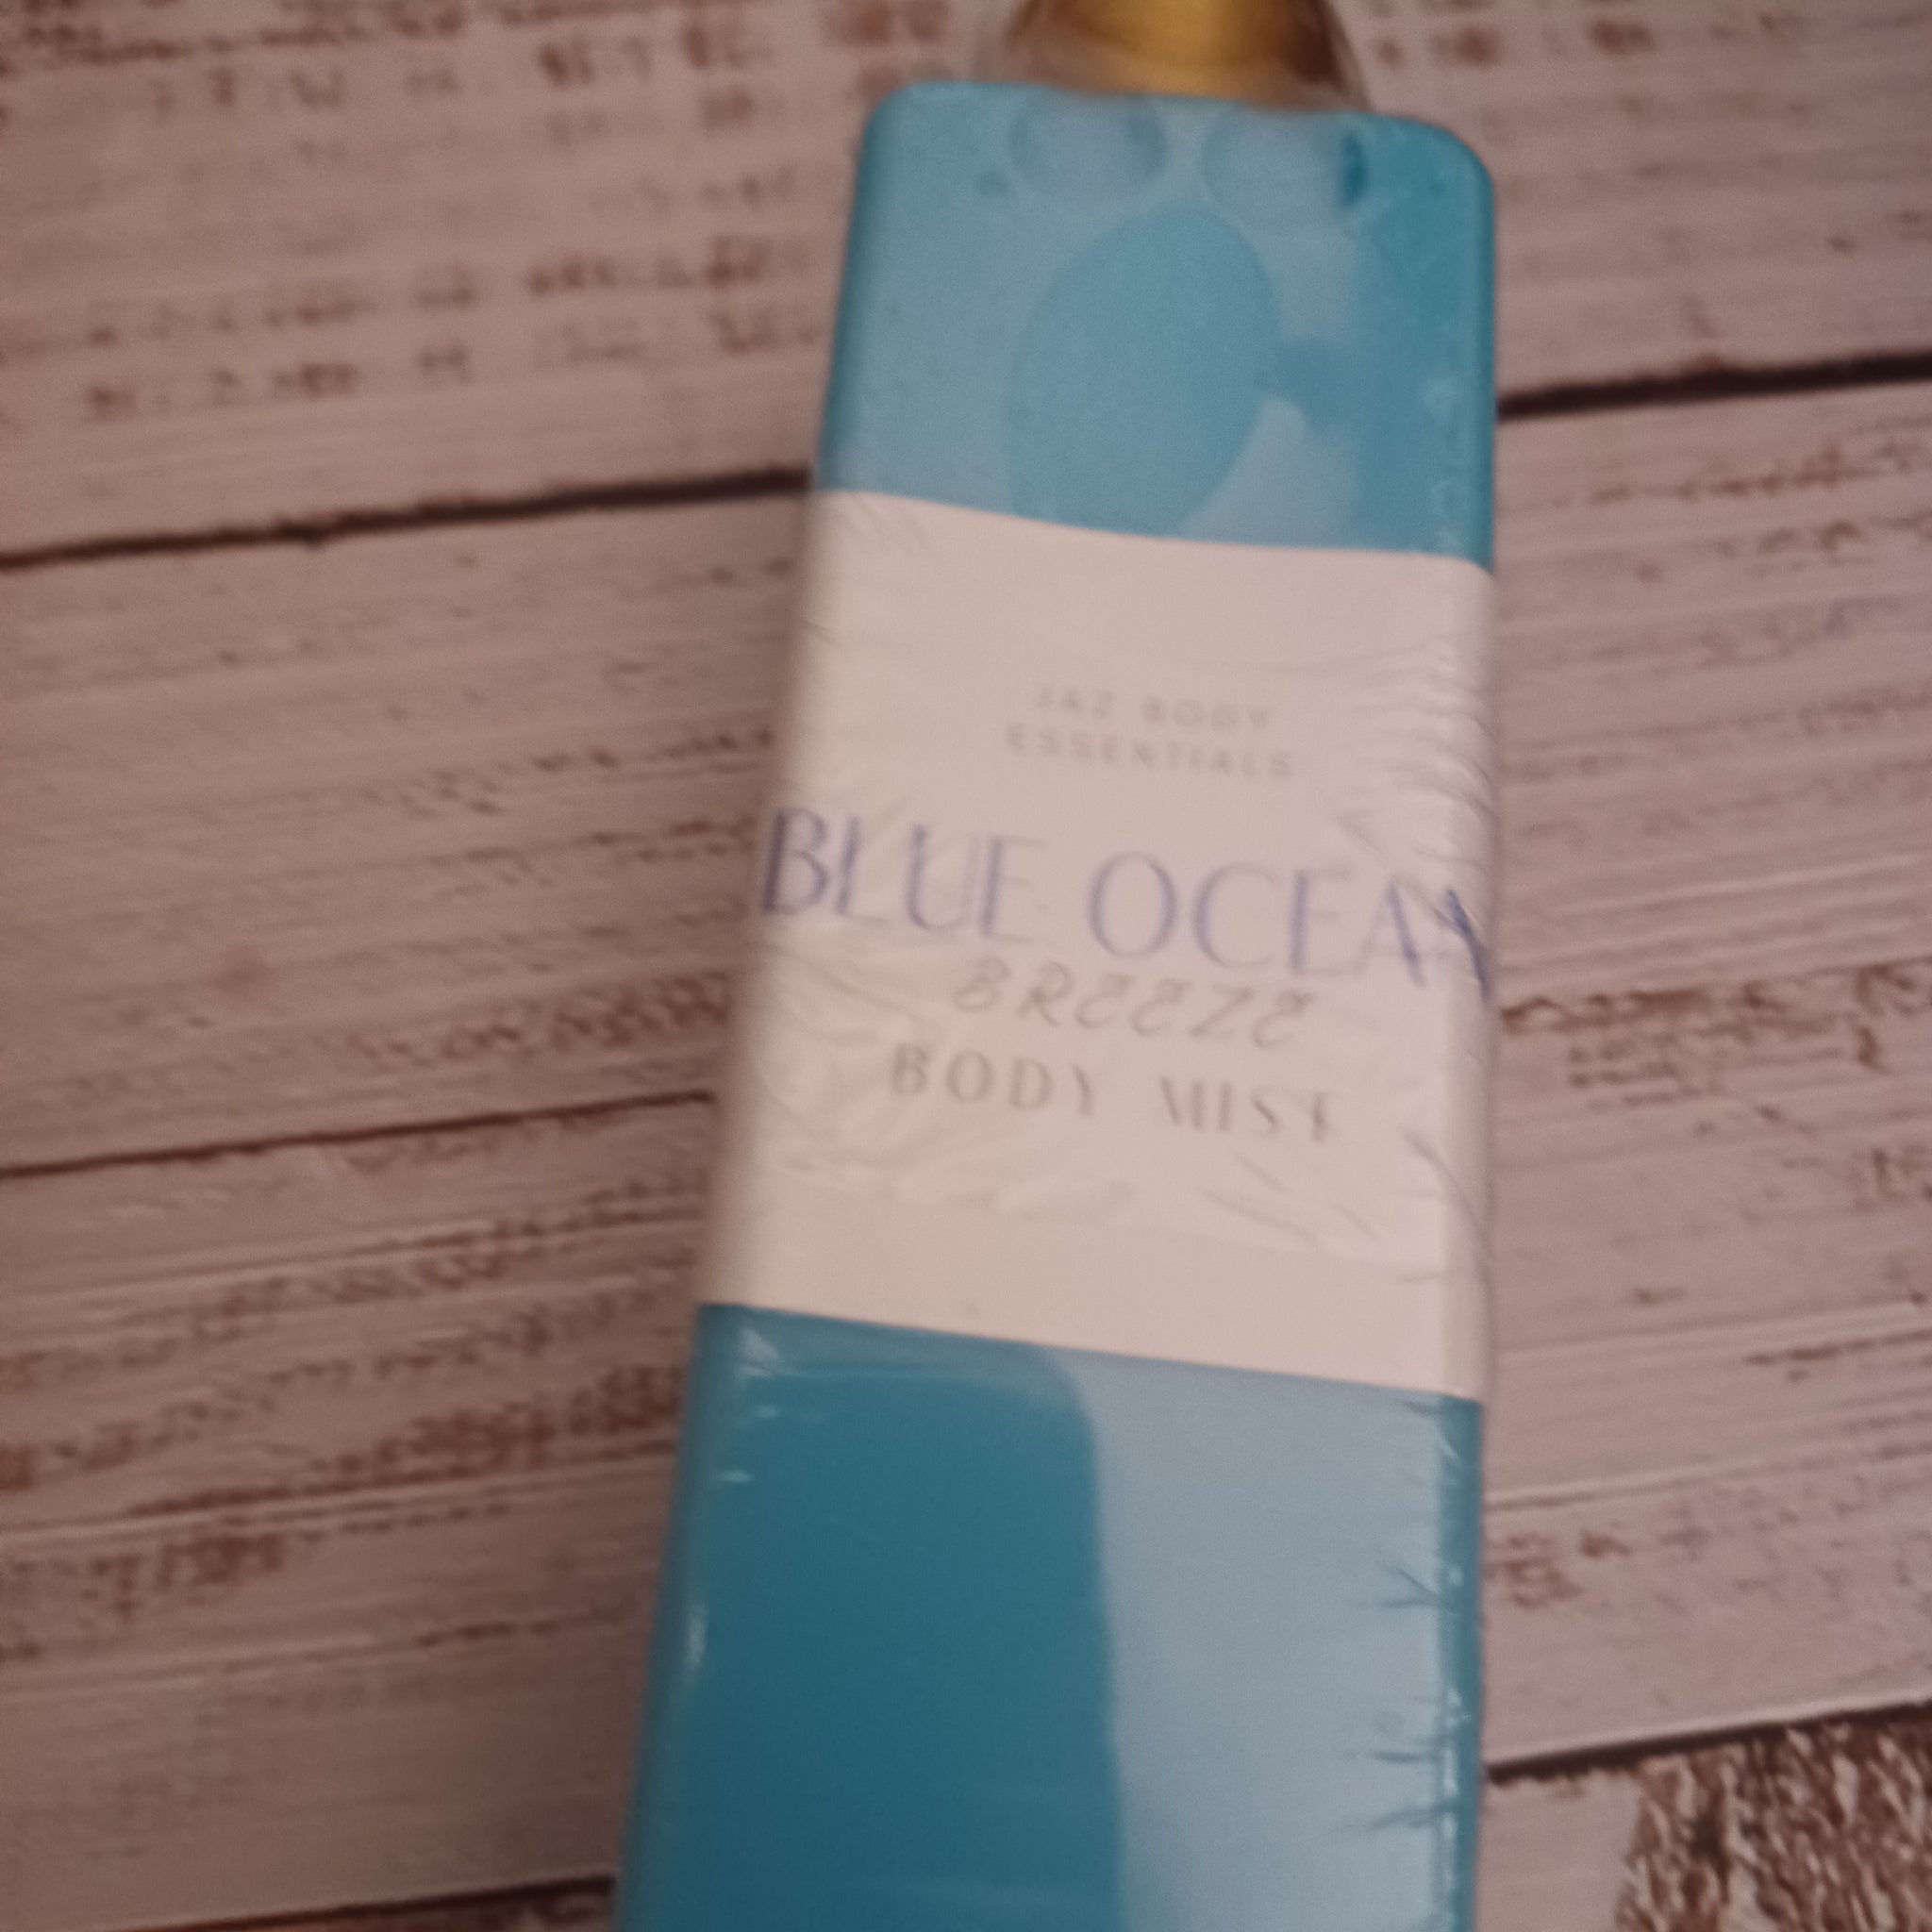 Blue Ocean Breeze Body Mist,  Scented Body Mist, Body Spray, Body Splash, Perfume, Body Scent, Fragrance Spray, Room and Body Spray